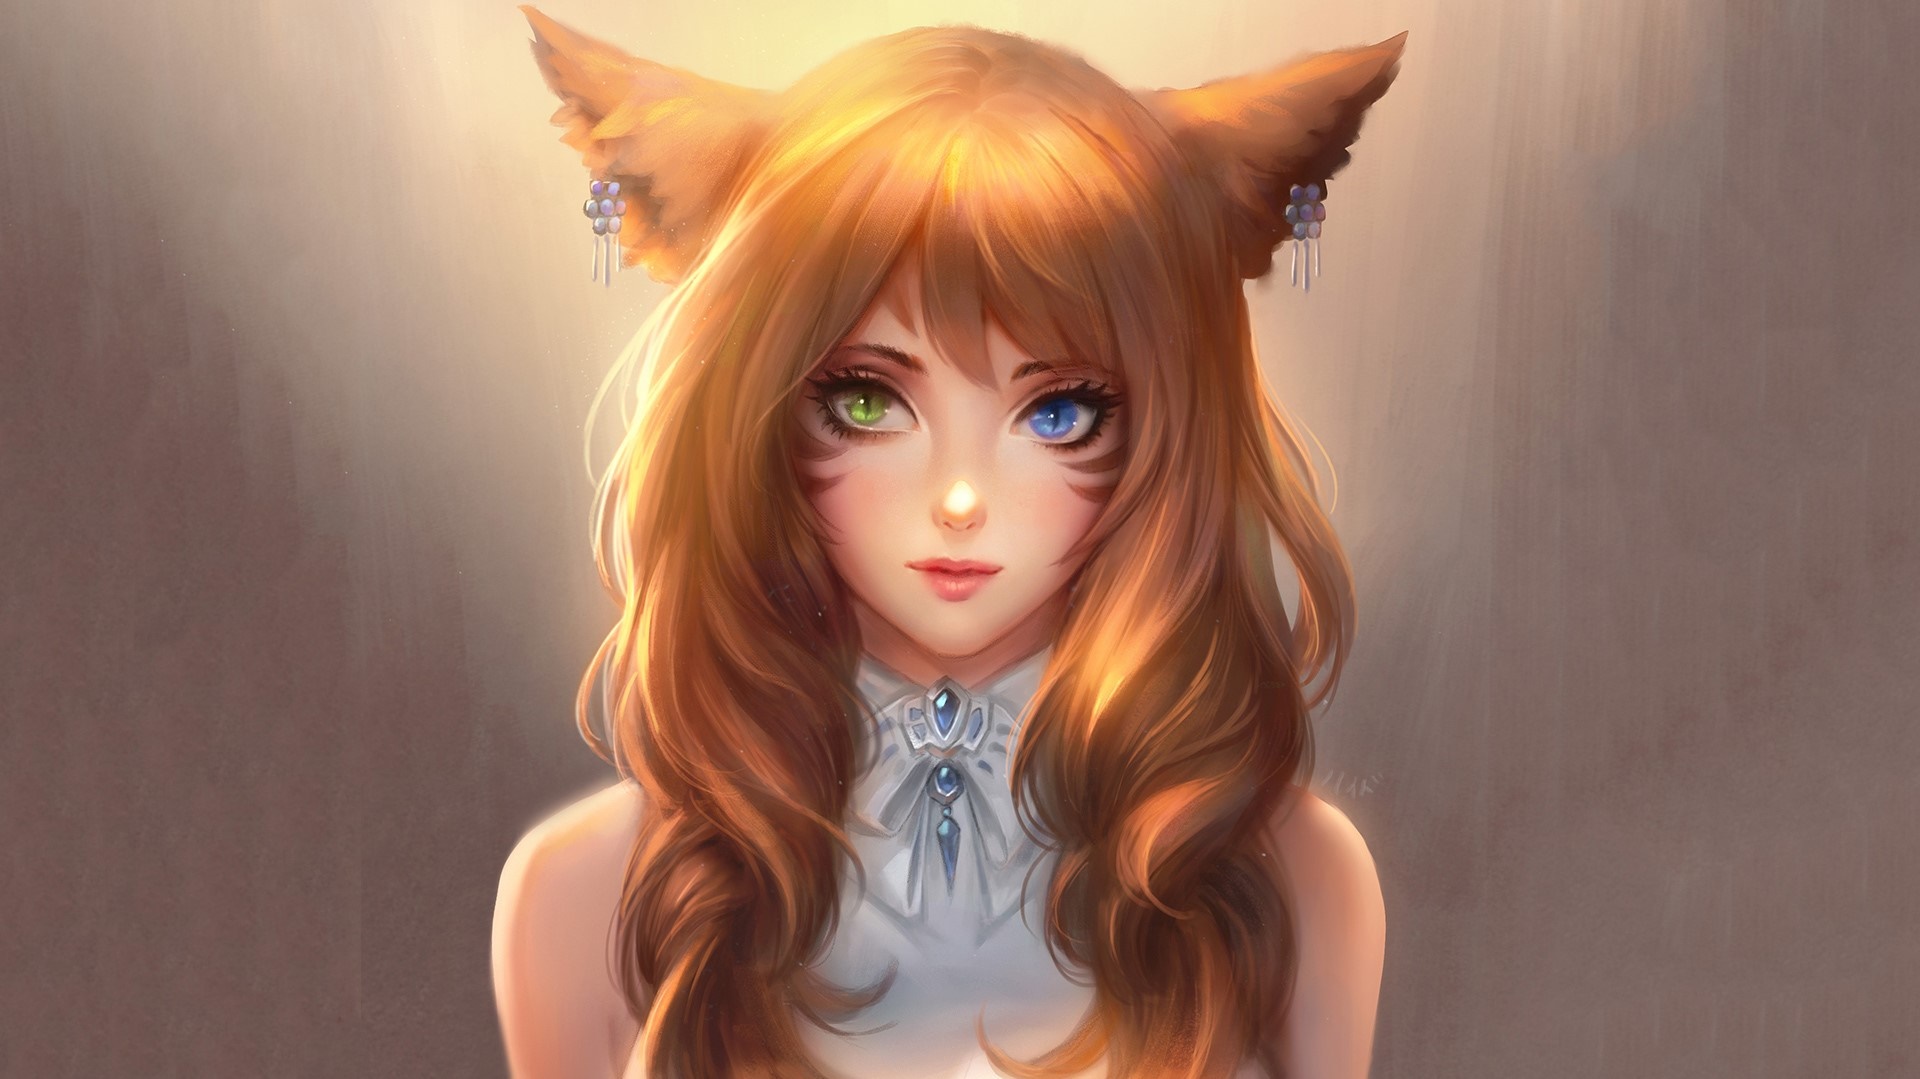 anime fox girl wearing a beautifully dec...